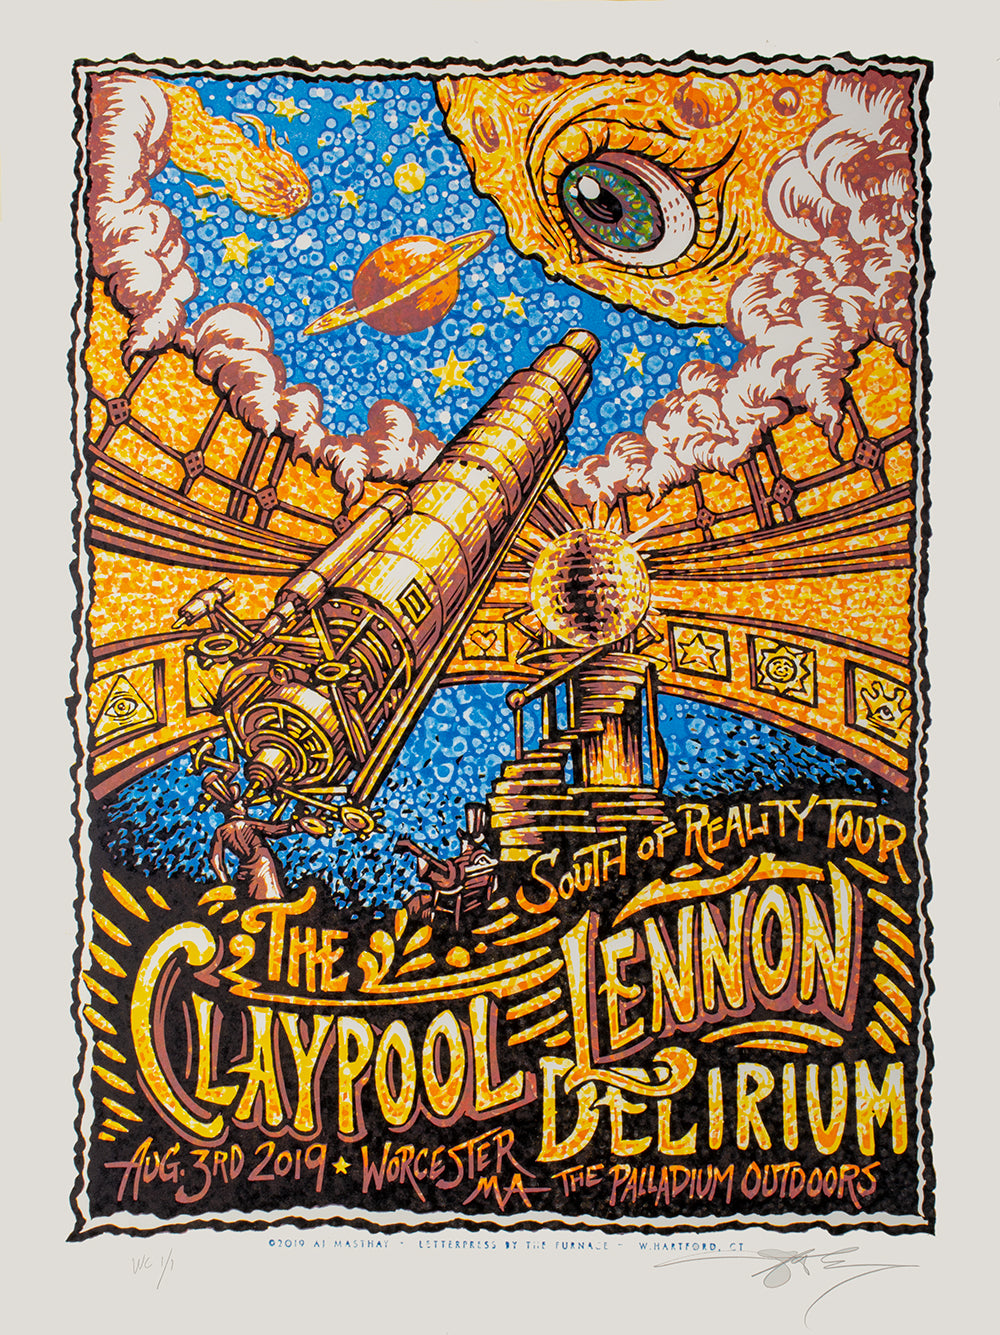 AJ Masthay "Claypool Lennon Delirium - Worcester, MA" Watercolor